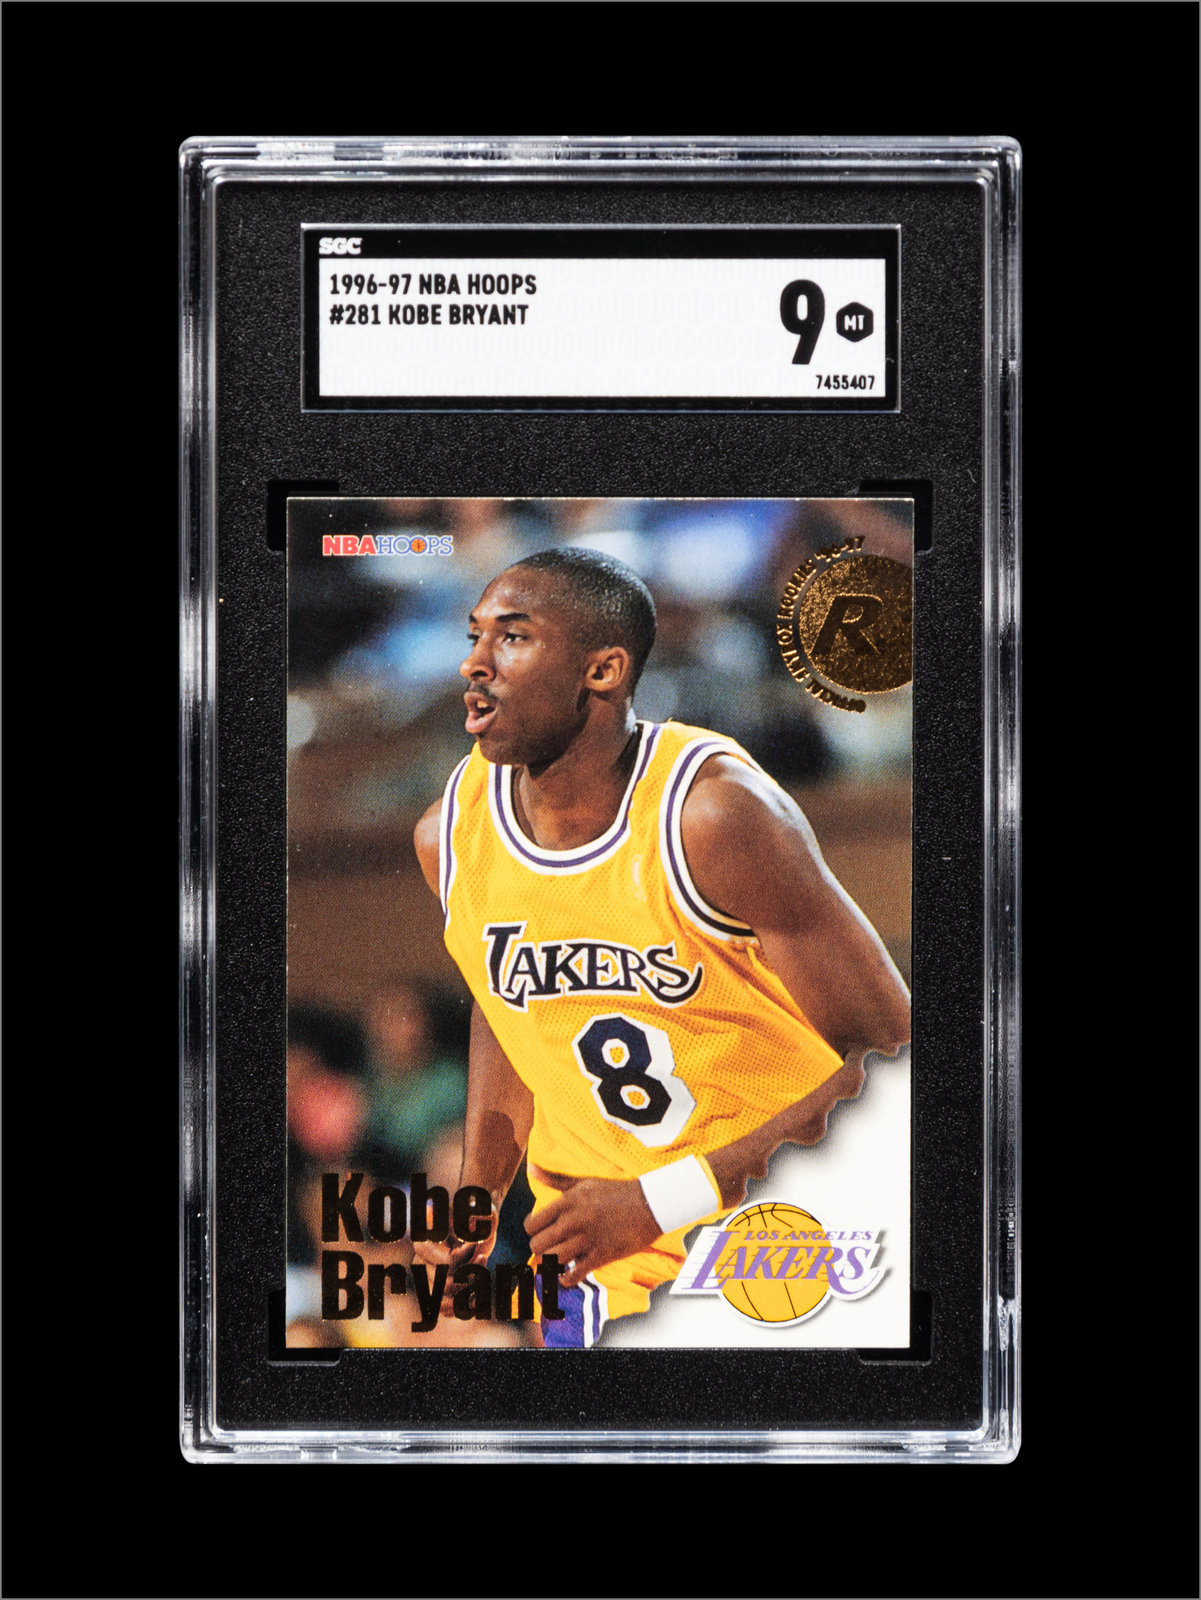 A Group of 1996-97 NBA Hoops Kobe Bryant Rookie Basketball 